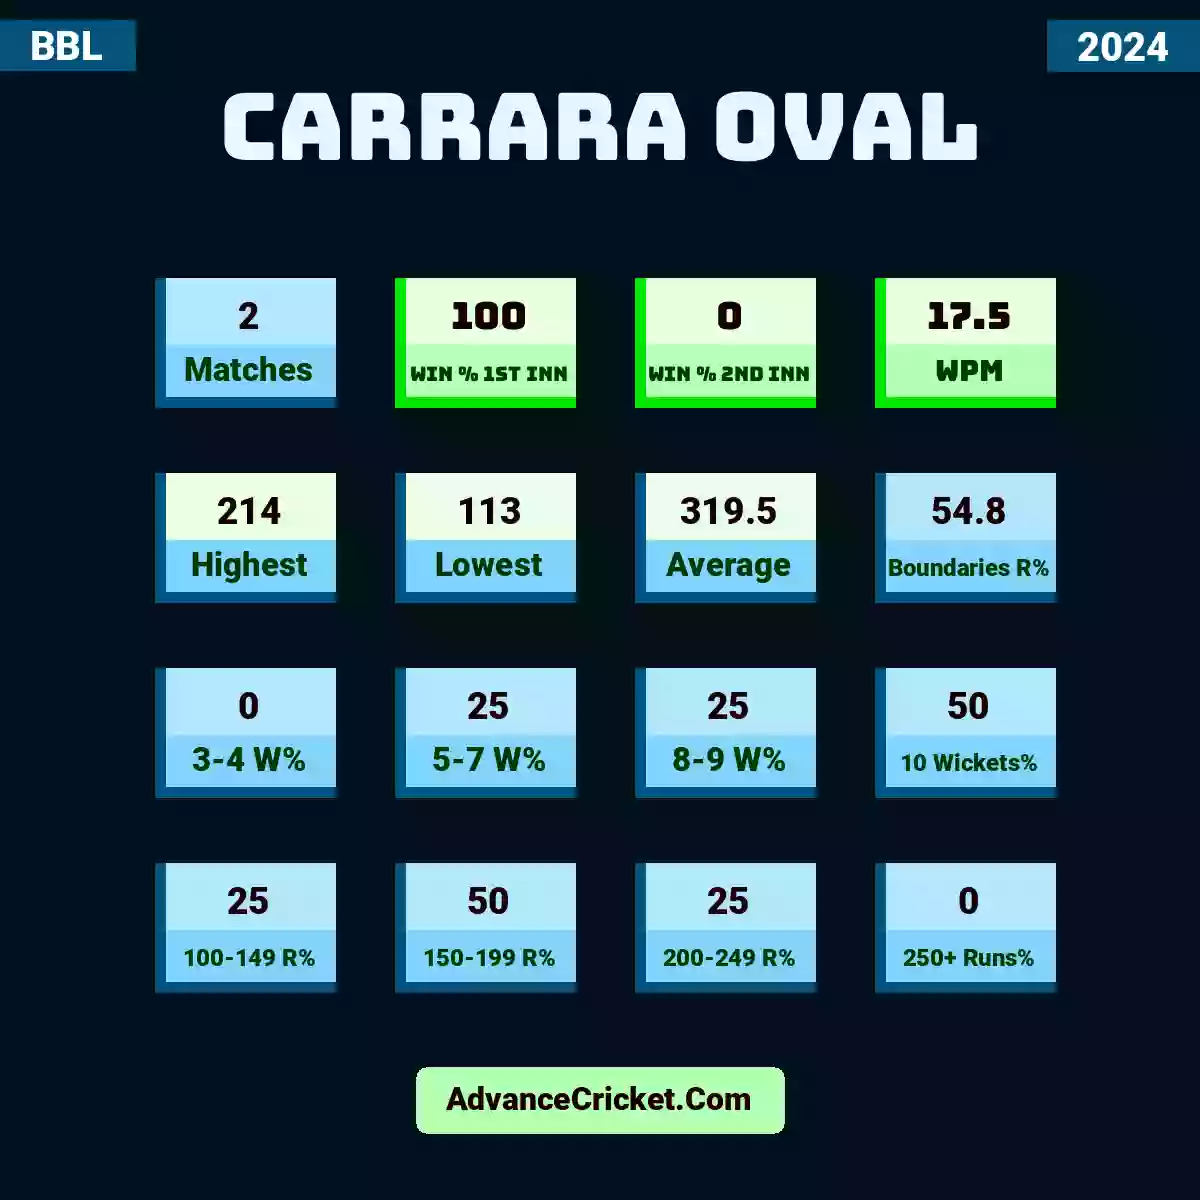 Image showing Carrara Oval with Matches: 2, Win % 1st Inn: 100, Win % 2nd Inn: 0, WPM: 17.5, Highest: 214, Lowest: 113, Average: 319.5, Boundaries R%: 54.8, 3-4 W%: 0, 5-7 W%: 25, 8-9 W%: 25, 10 Wickets%: 50, 100-149 R%: 25, 150-199 R%: 50, 200-249 R%: 25, 250+ Runs%: 0.